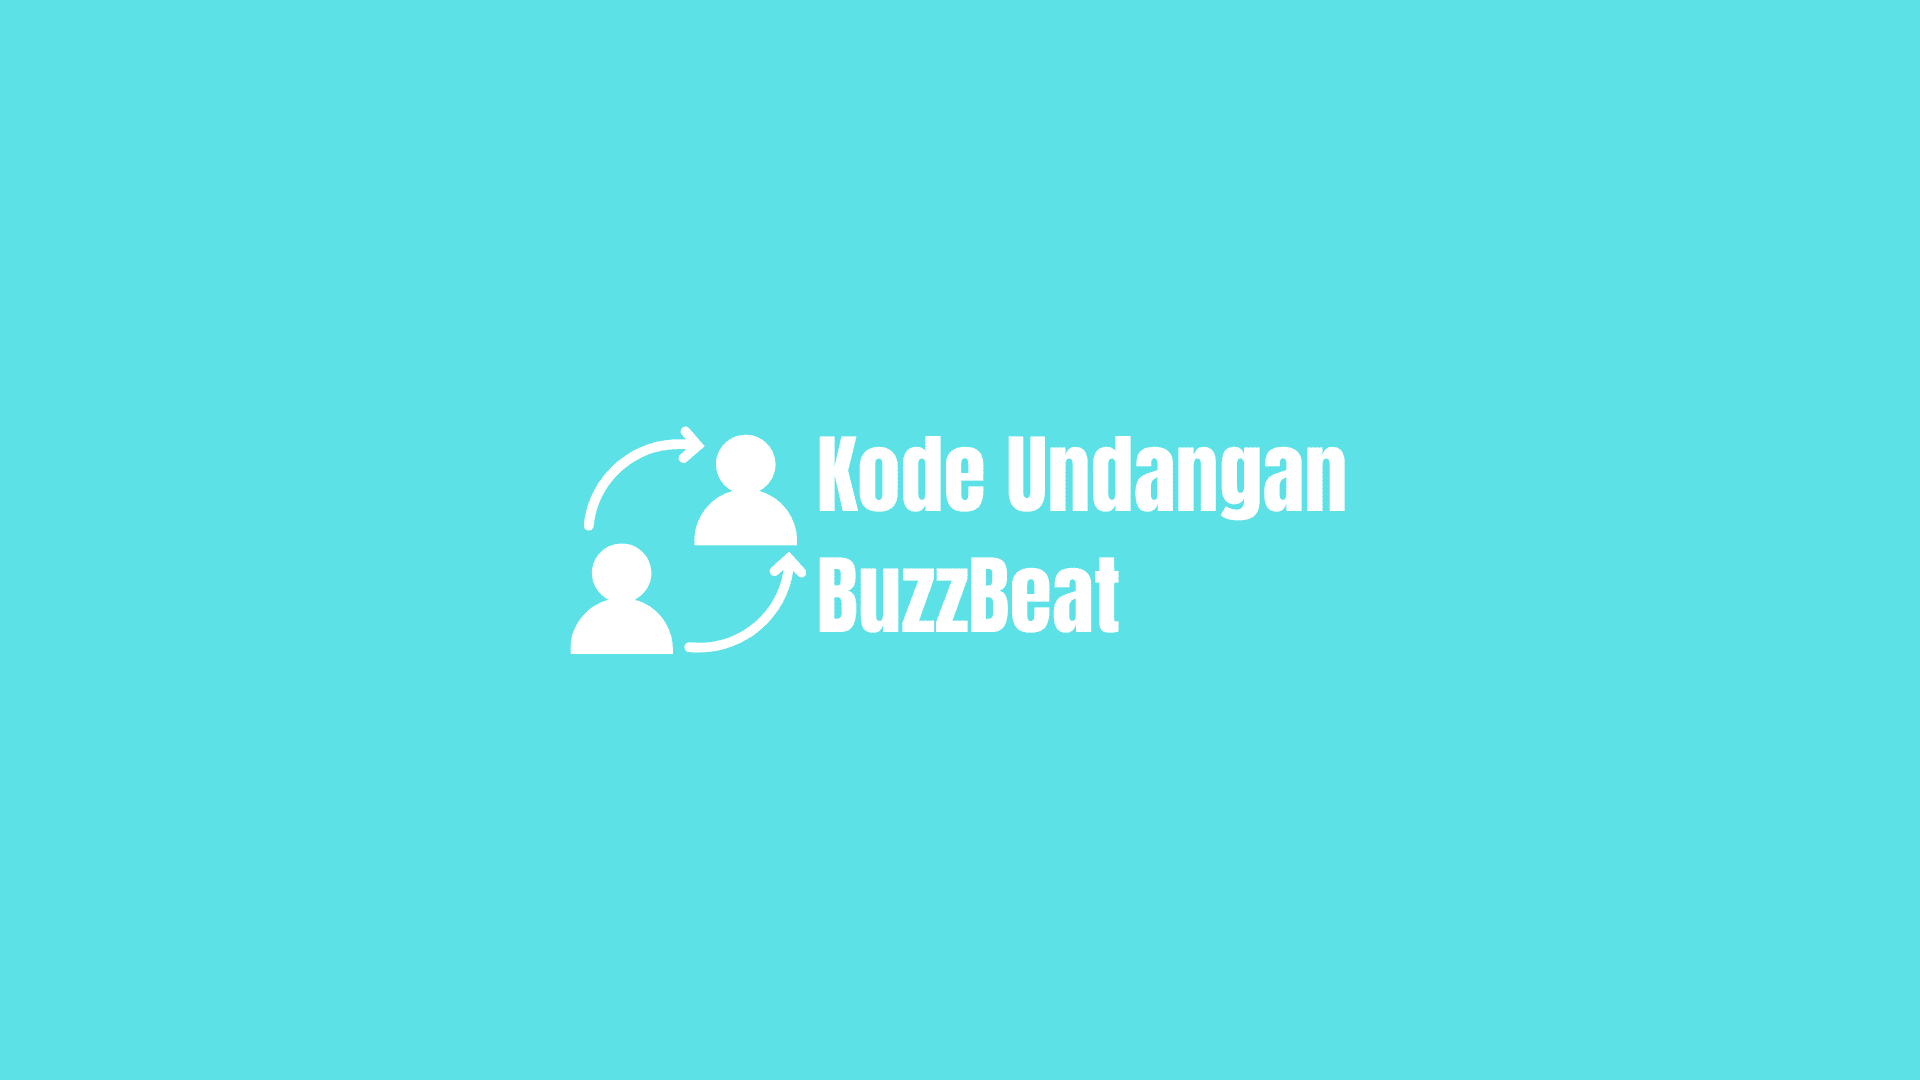 kode undangan buzzbeat